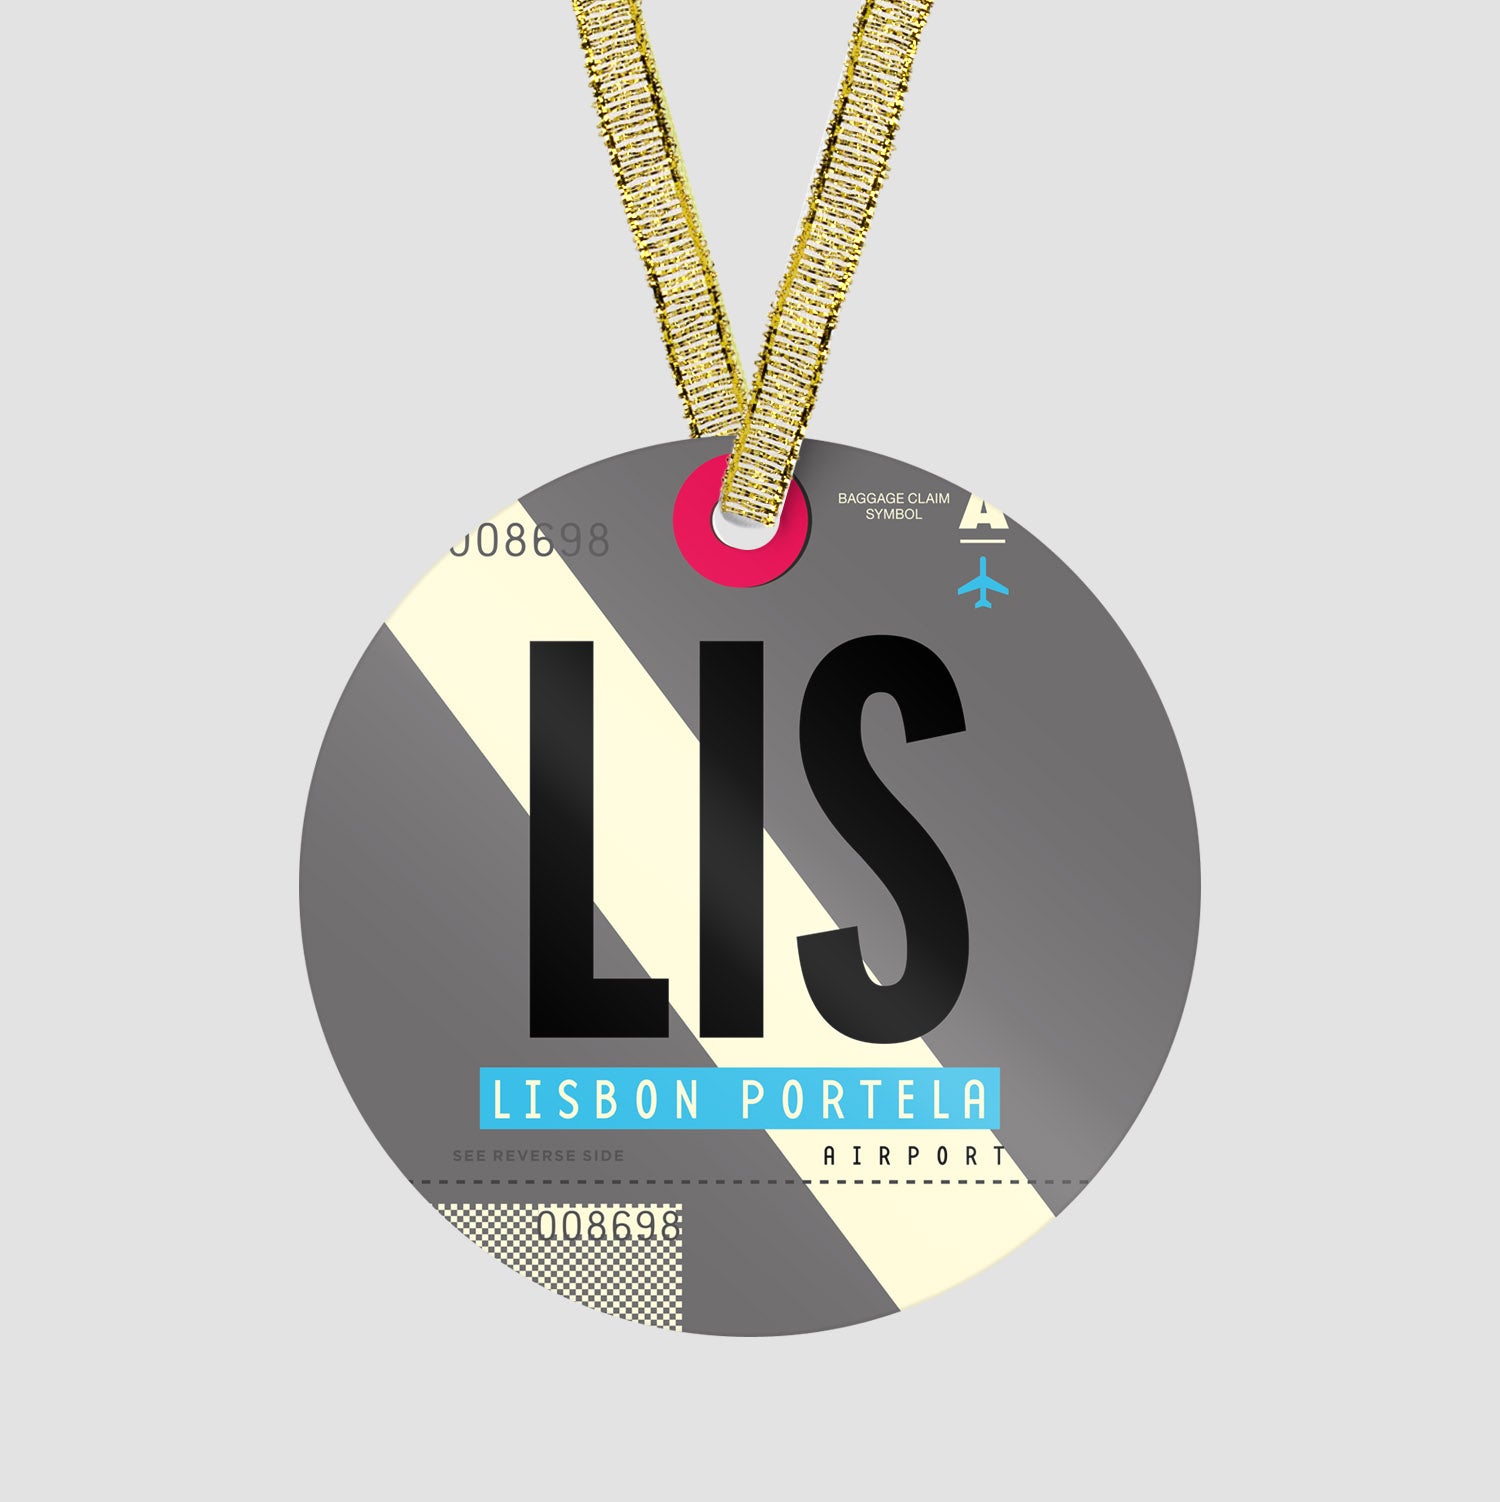 LIS - Ornament - Airportag